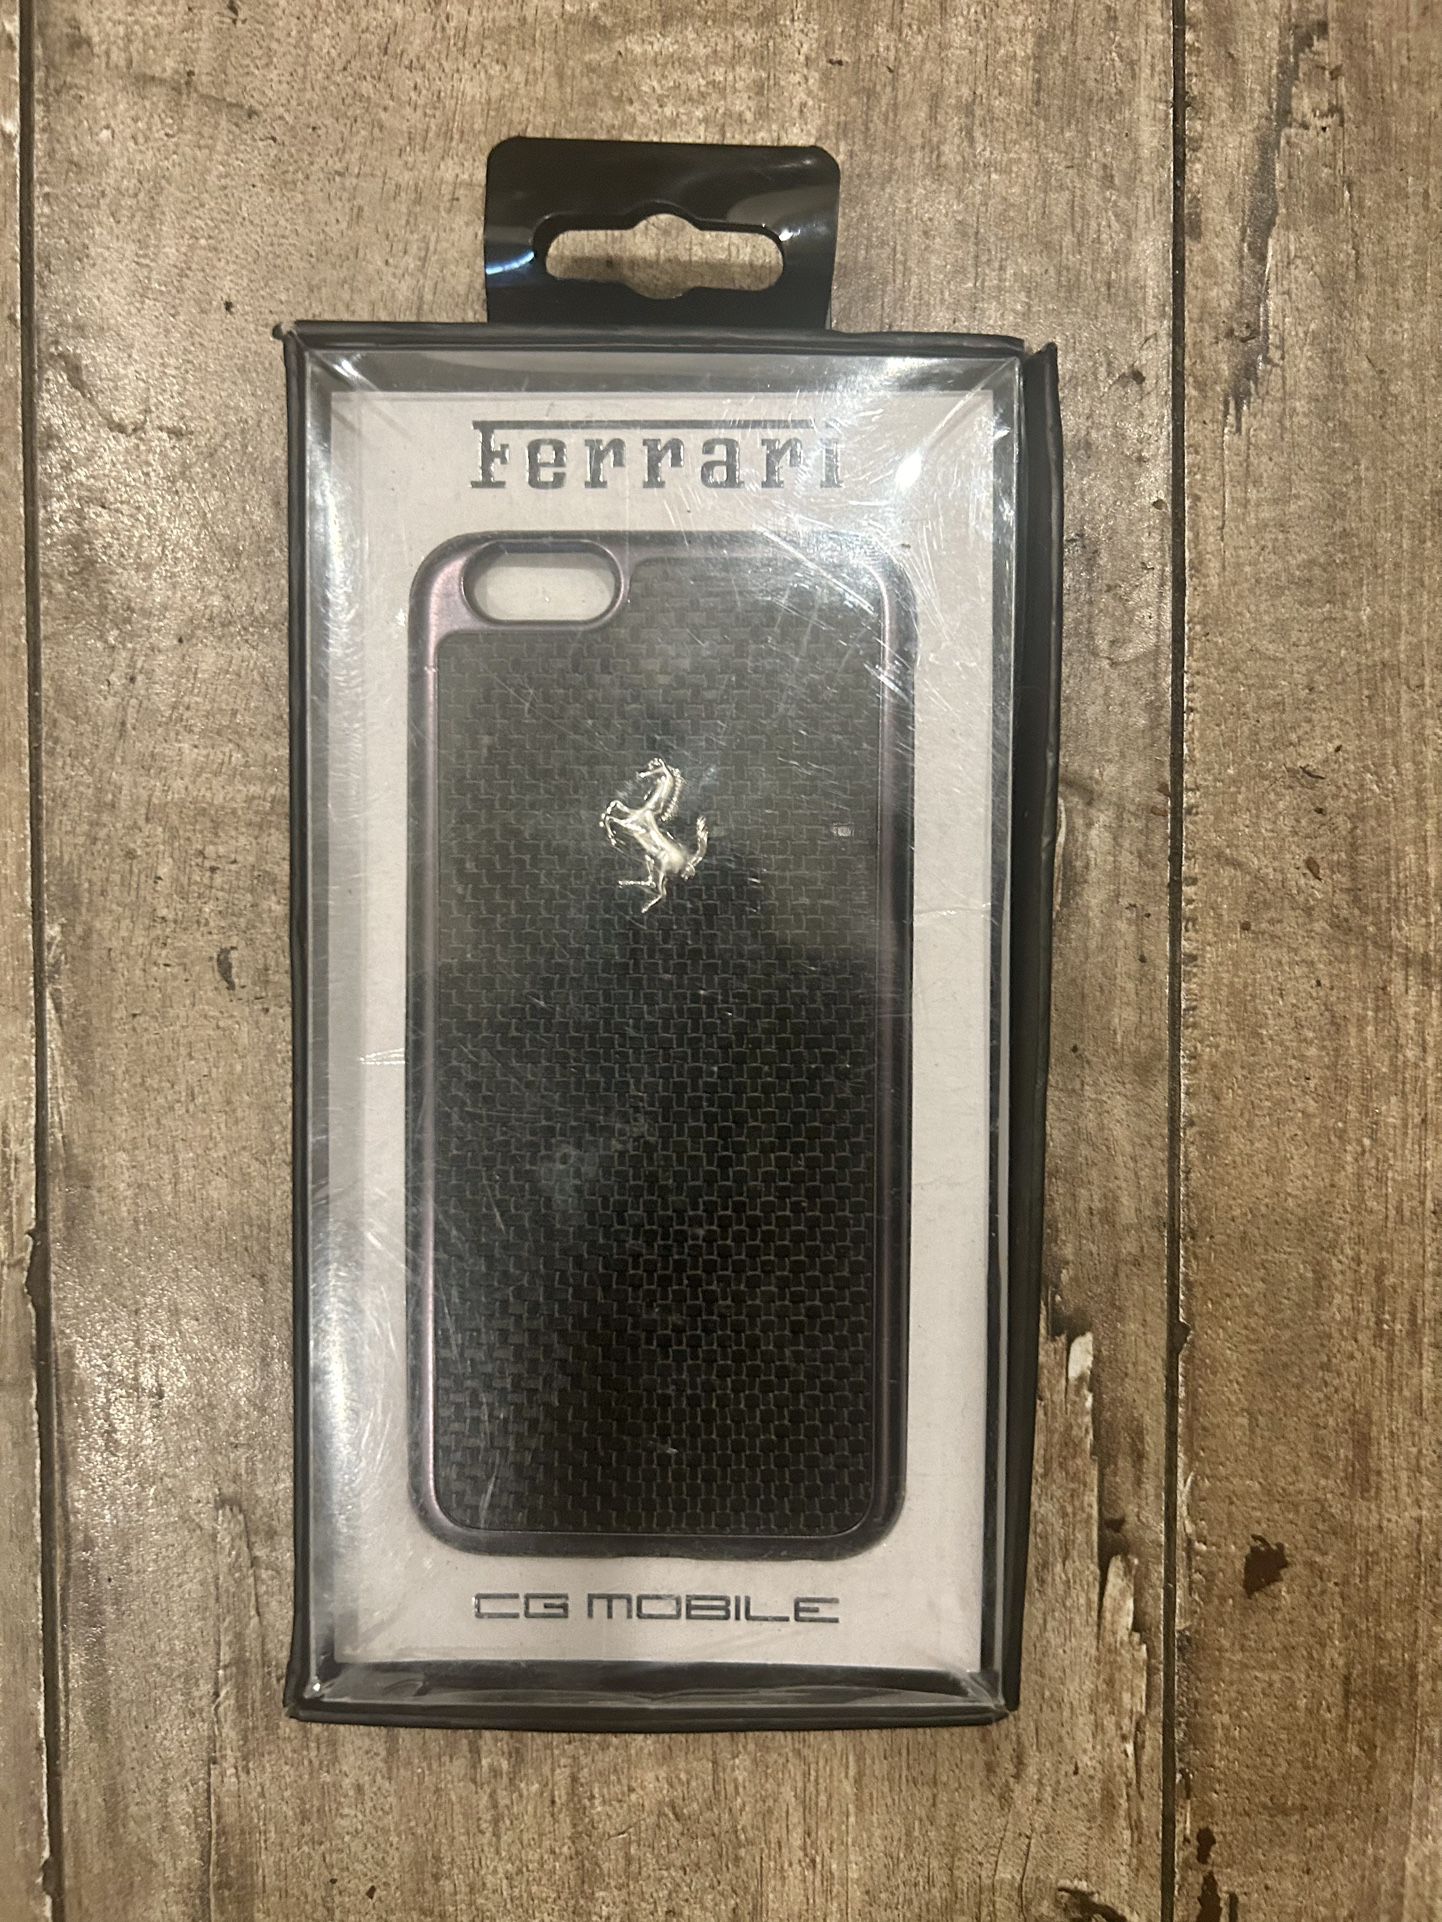 Ferrari Gt - Carbon Fiber Hard Phone Case for iPhone 6 / 6S - Black Frame